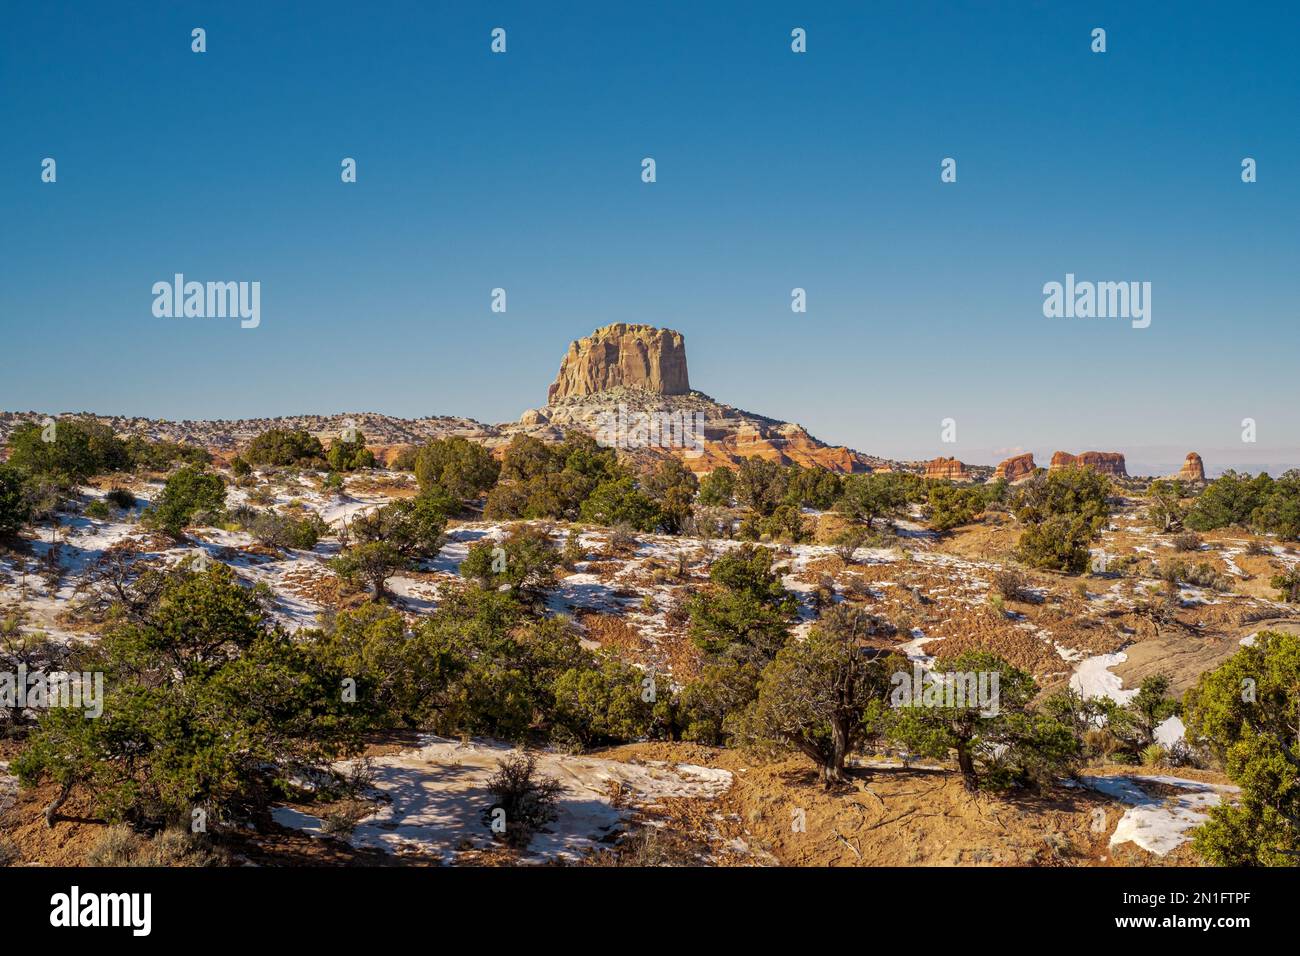 Sandstone monolithic rock formation in the desert area on the Arizona-Utah border, USA Stock Photo